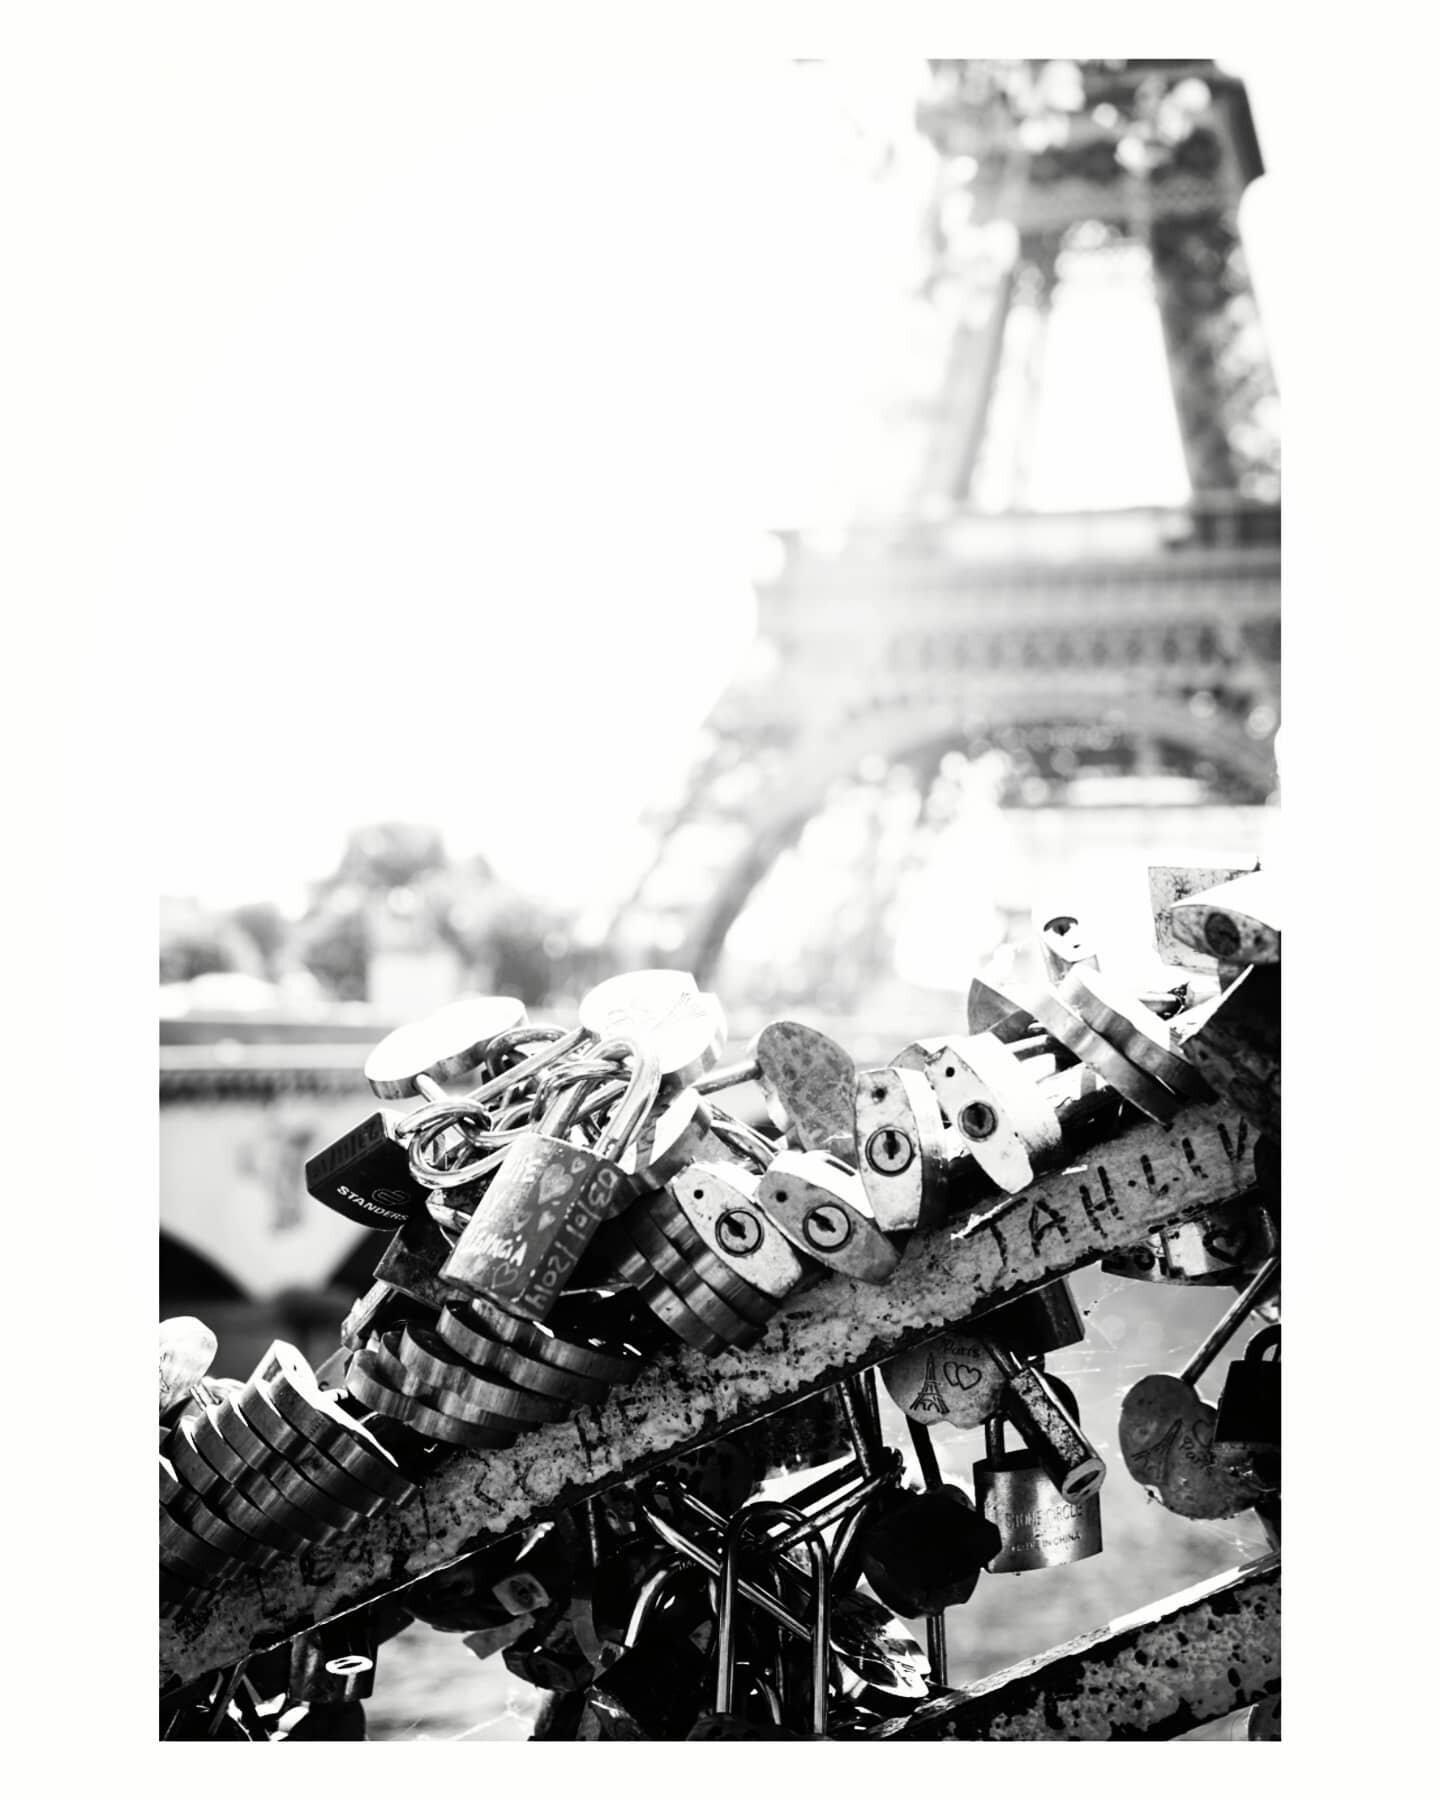 Where lovers stood

Pont de l'I&eacute;na, Paris

2020/06

#paris #urbanromantix